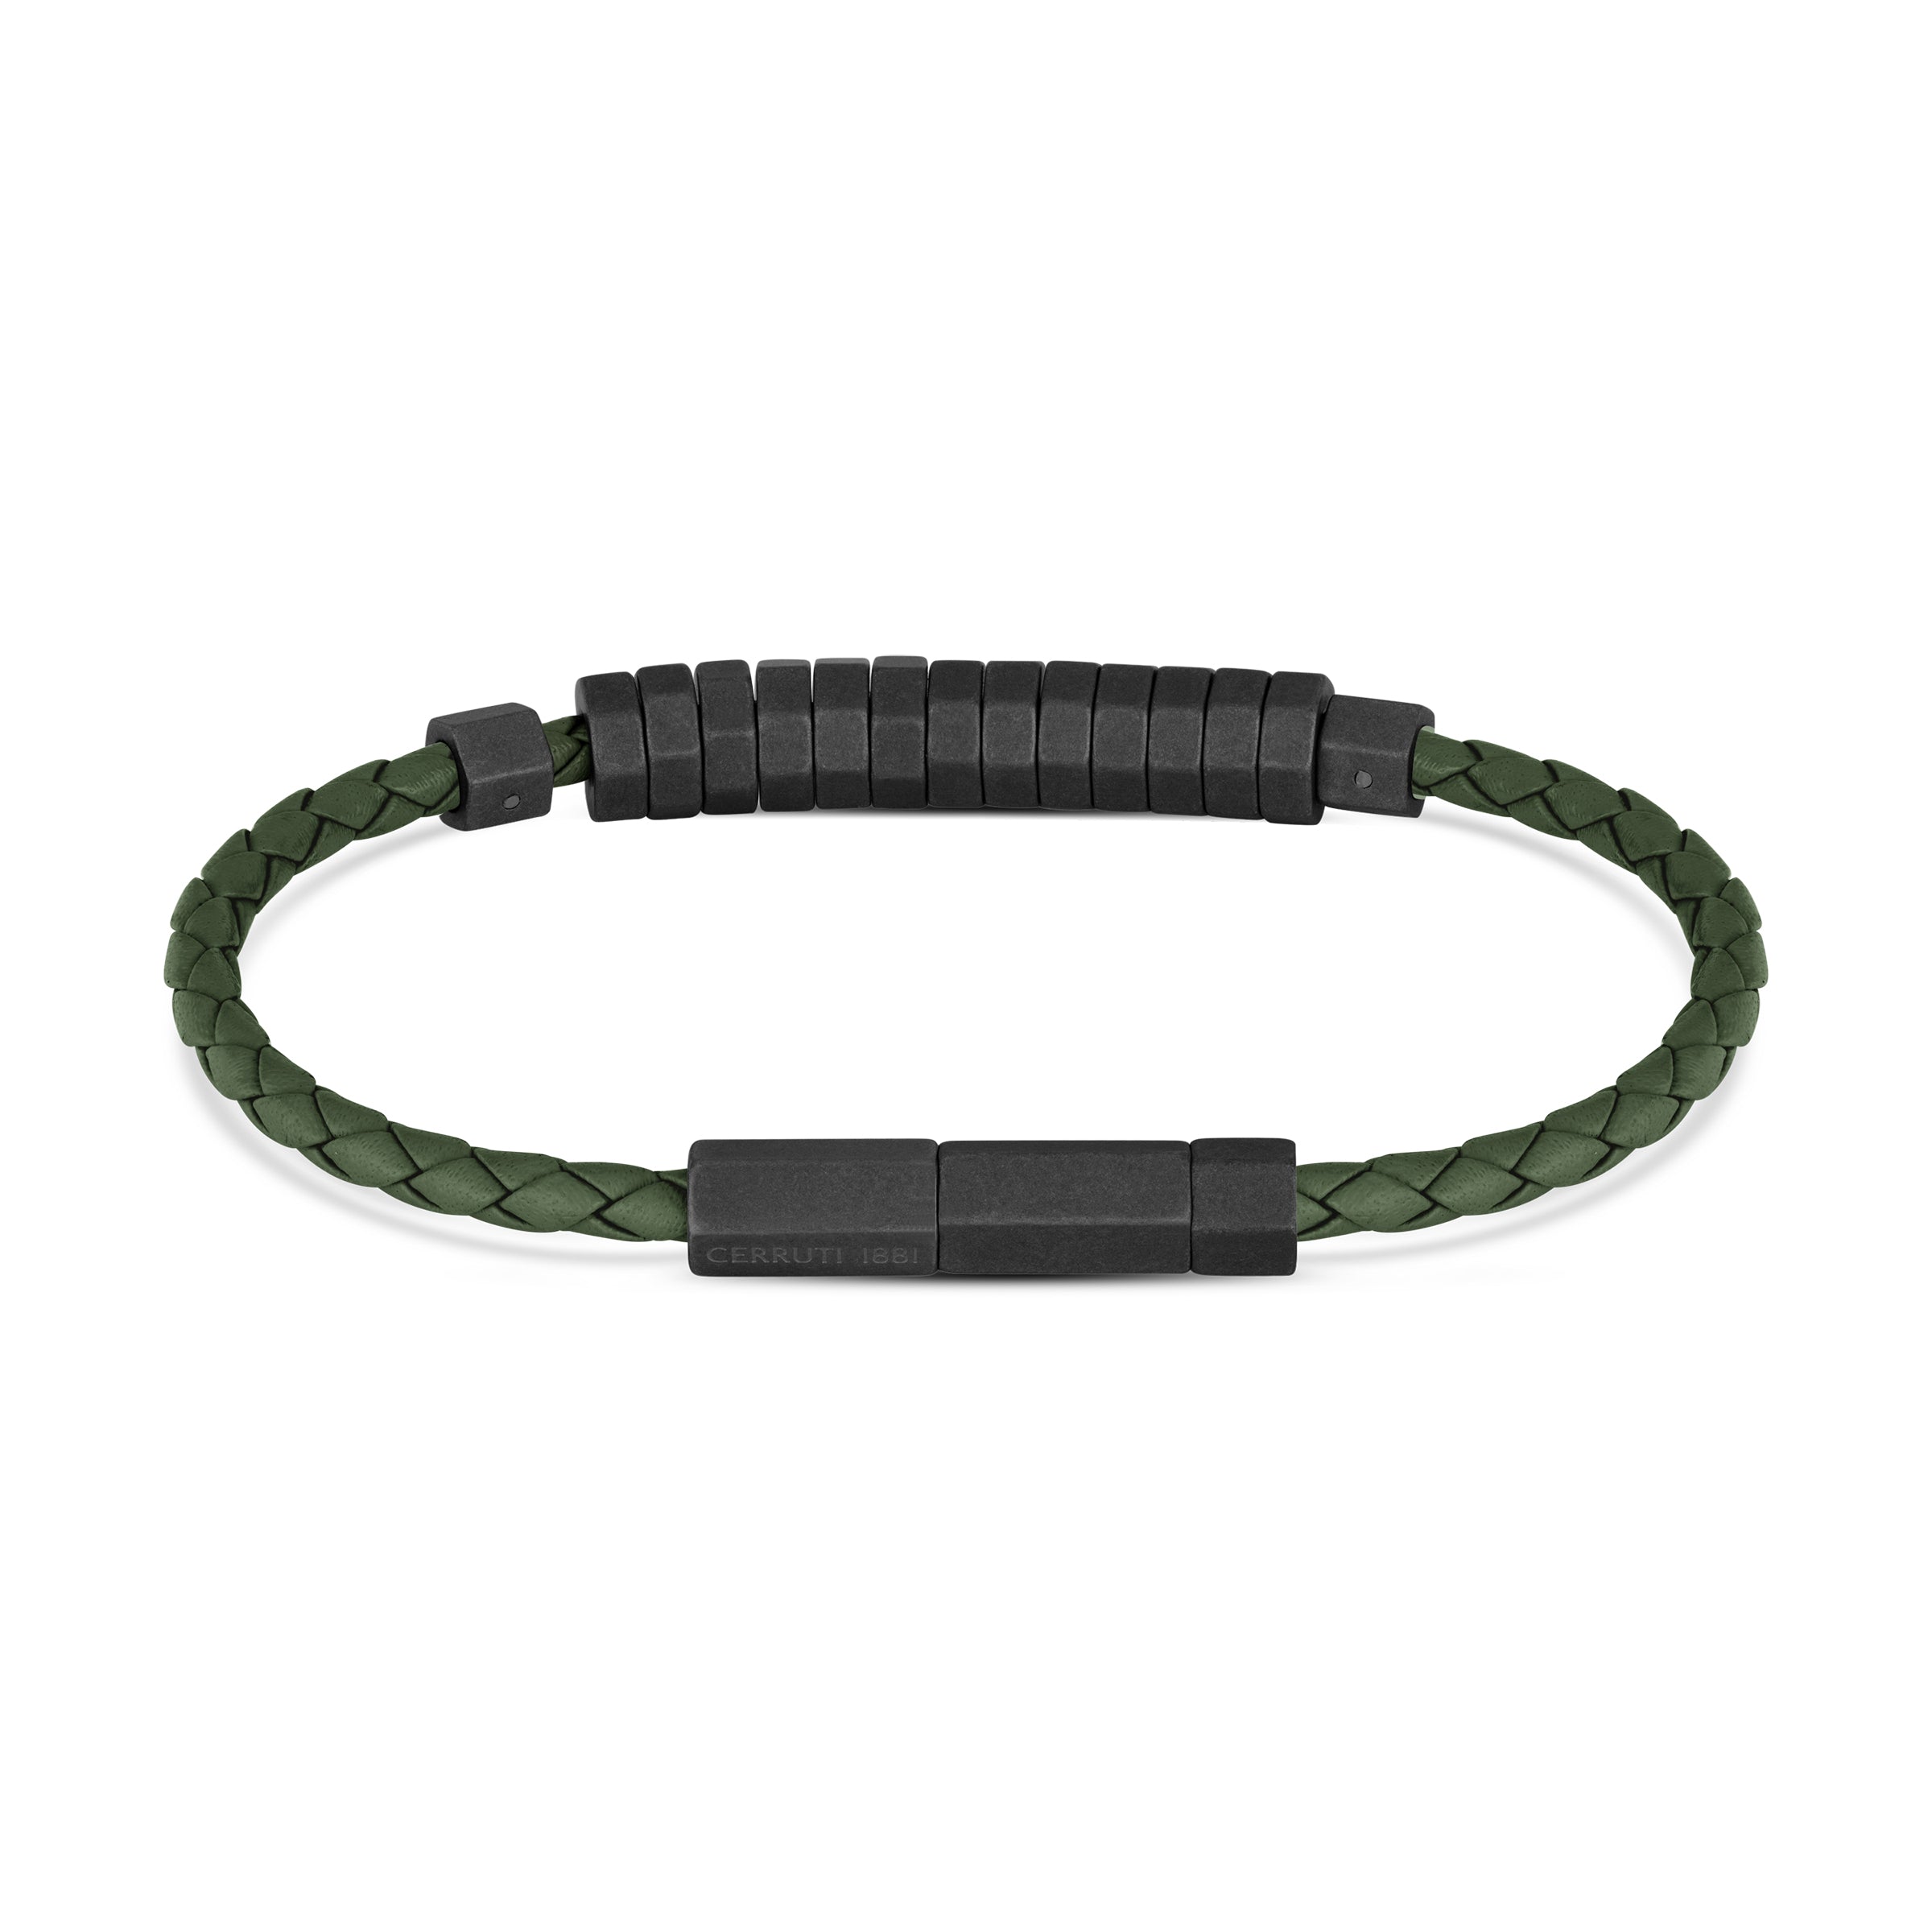 Cerruti Gray Bracelet for Men - CERBR-0010